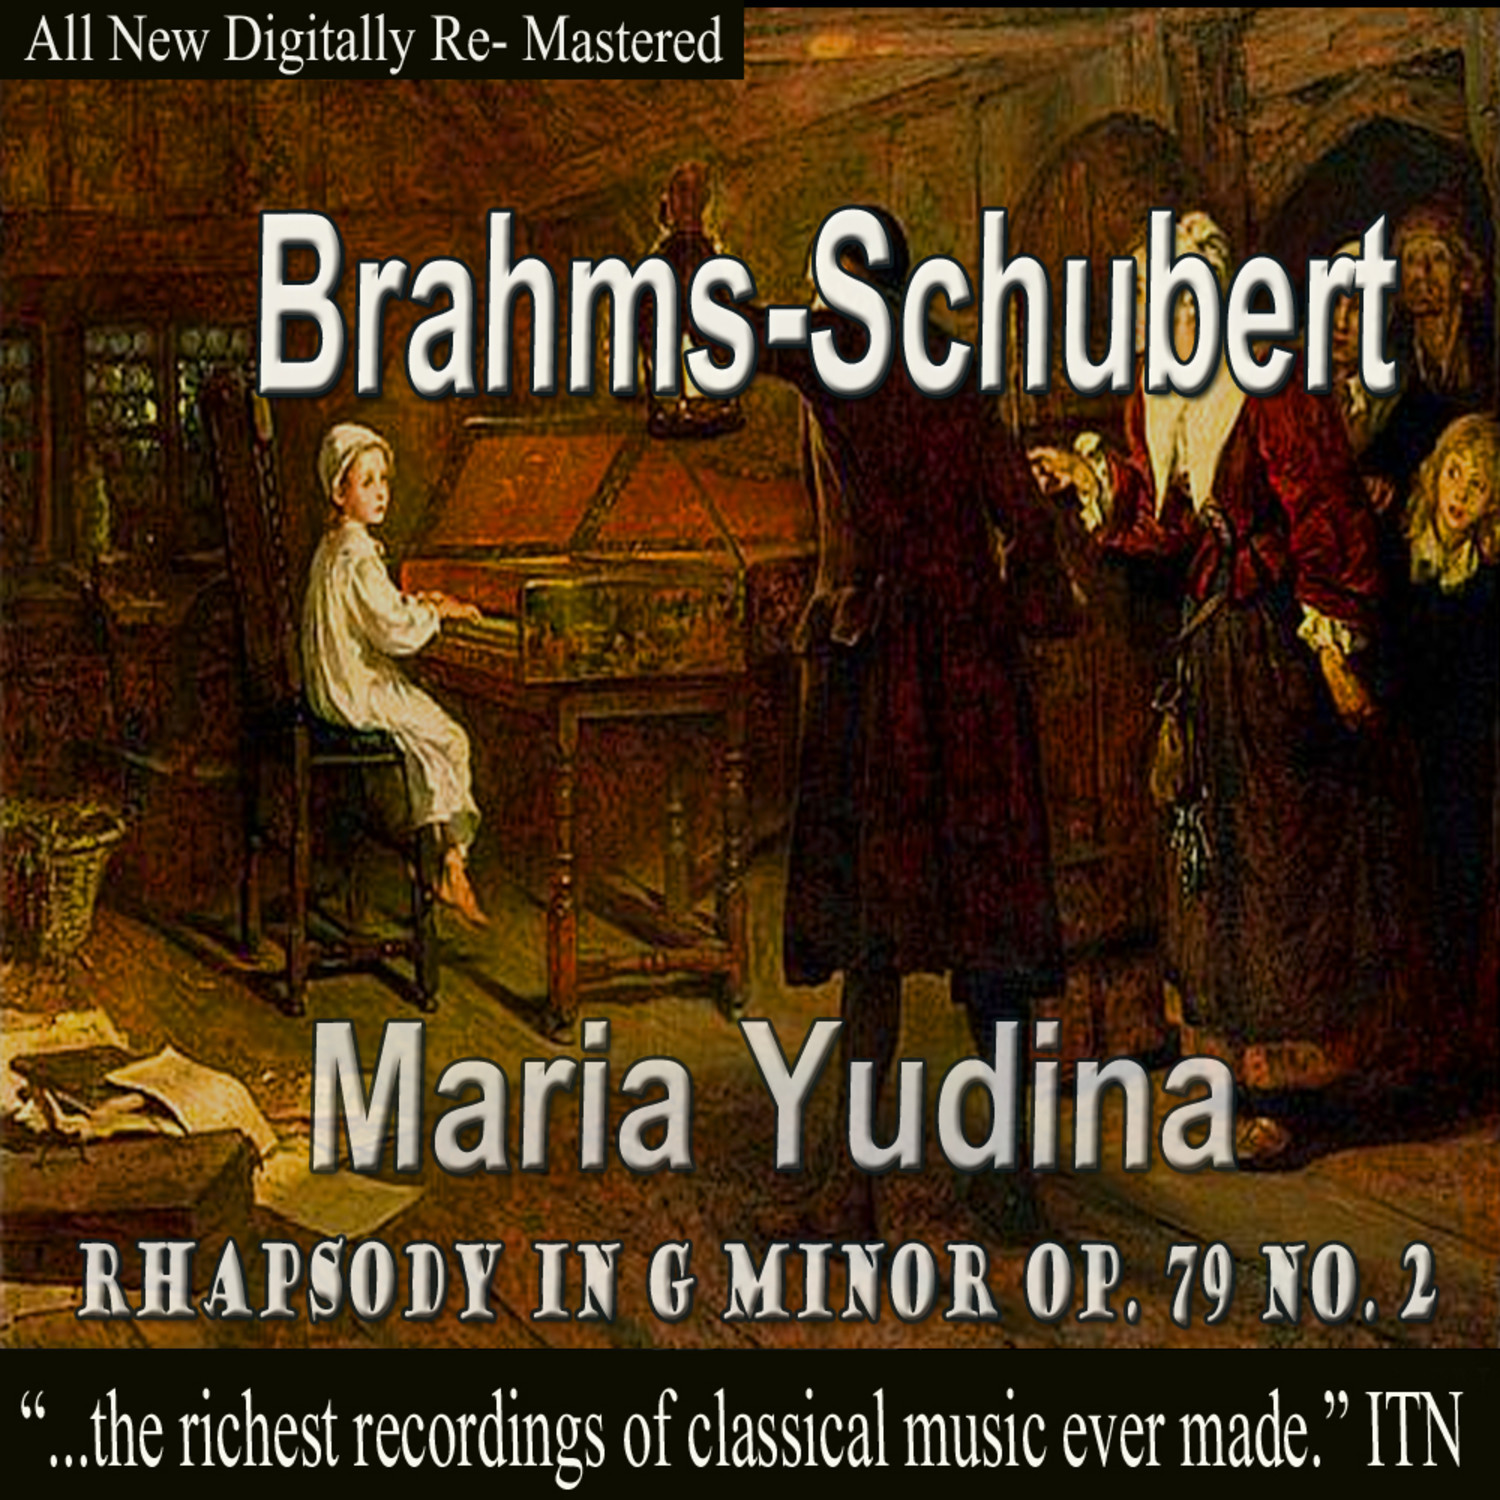 Brahms, Schubert - Maria Yudina, Rhapsody in G Minor Op.79 No.2